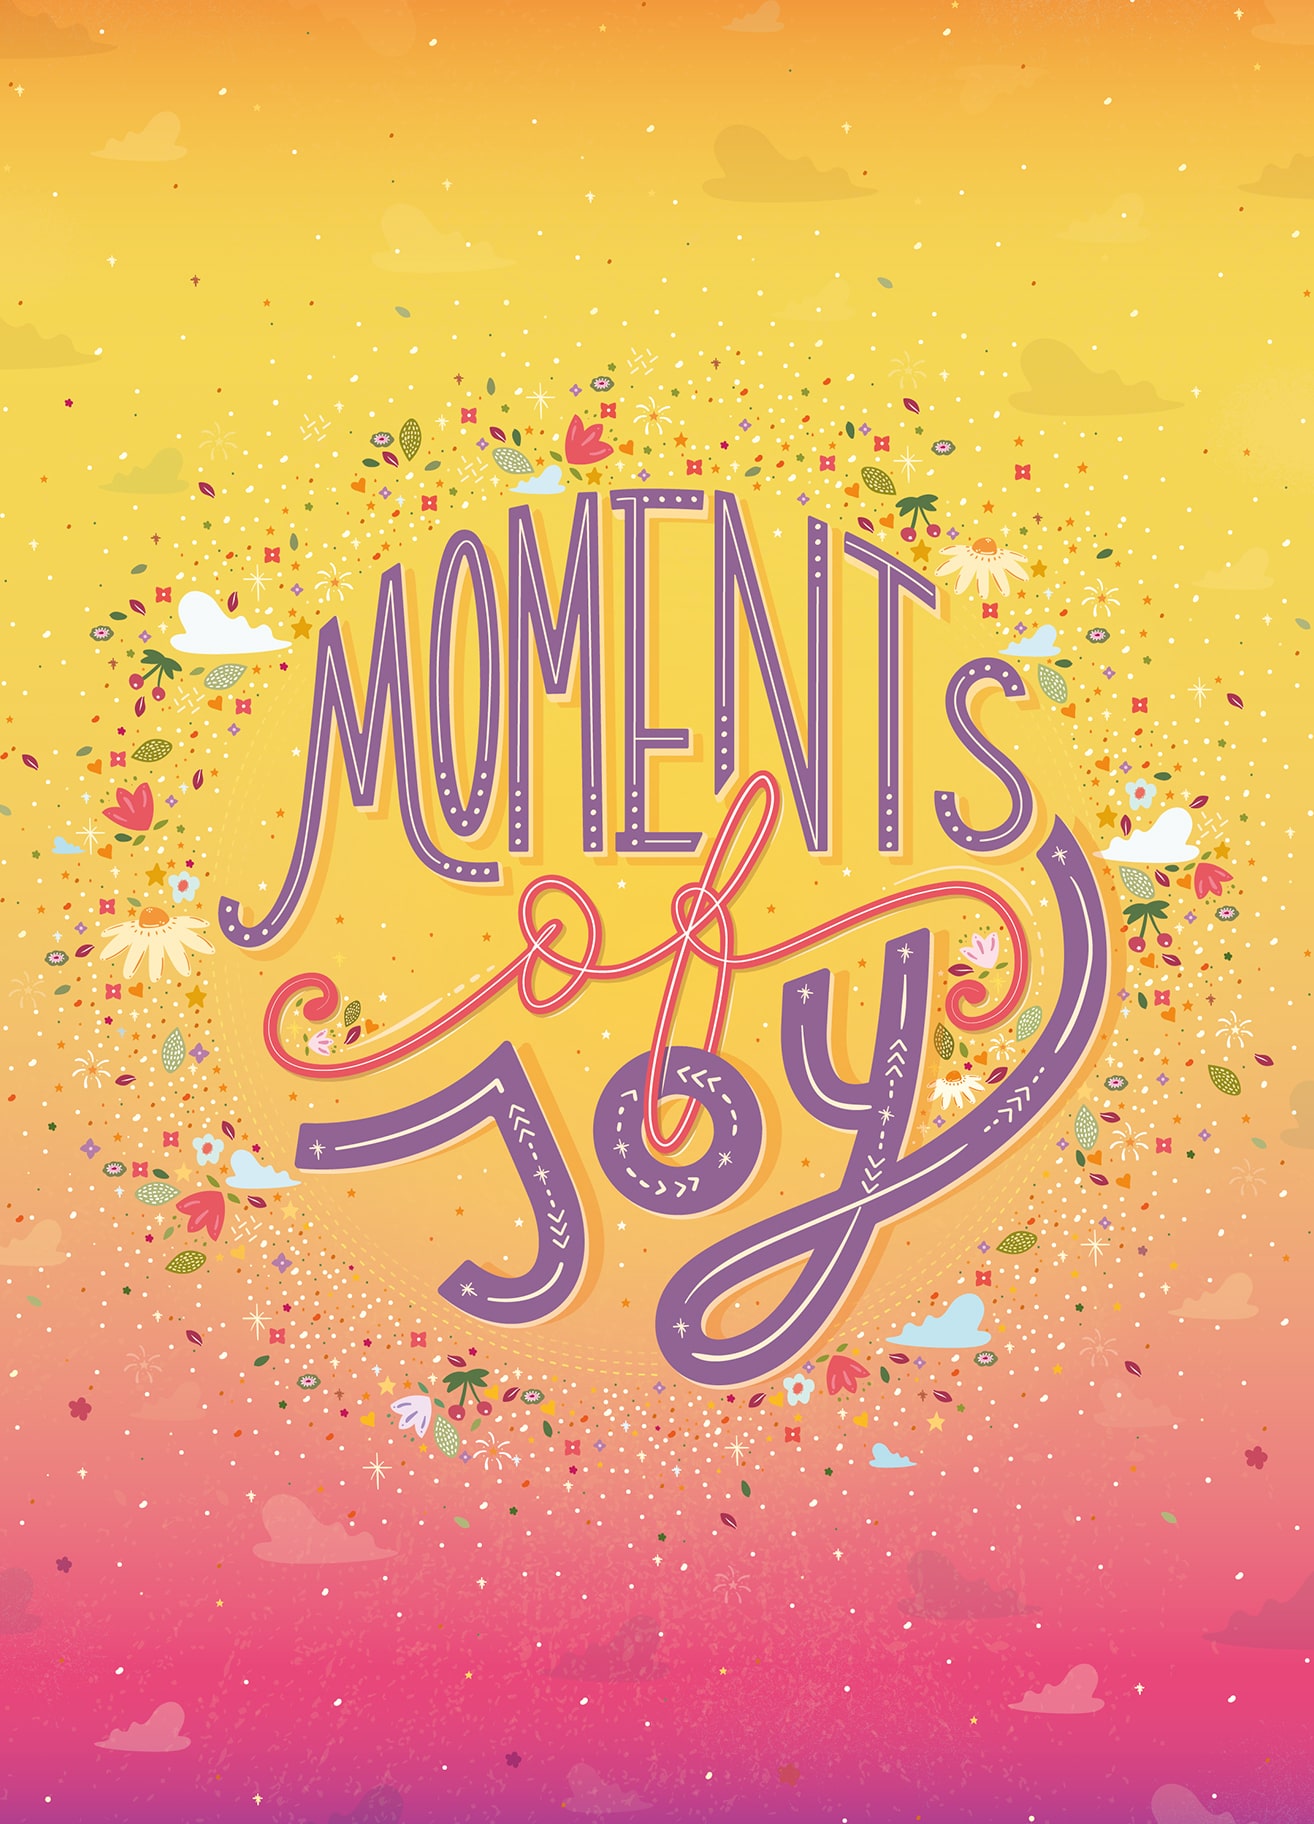 Moments Of Joy